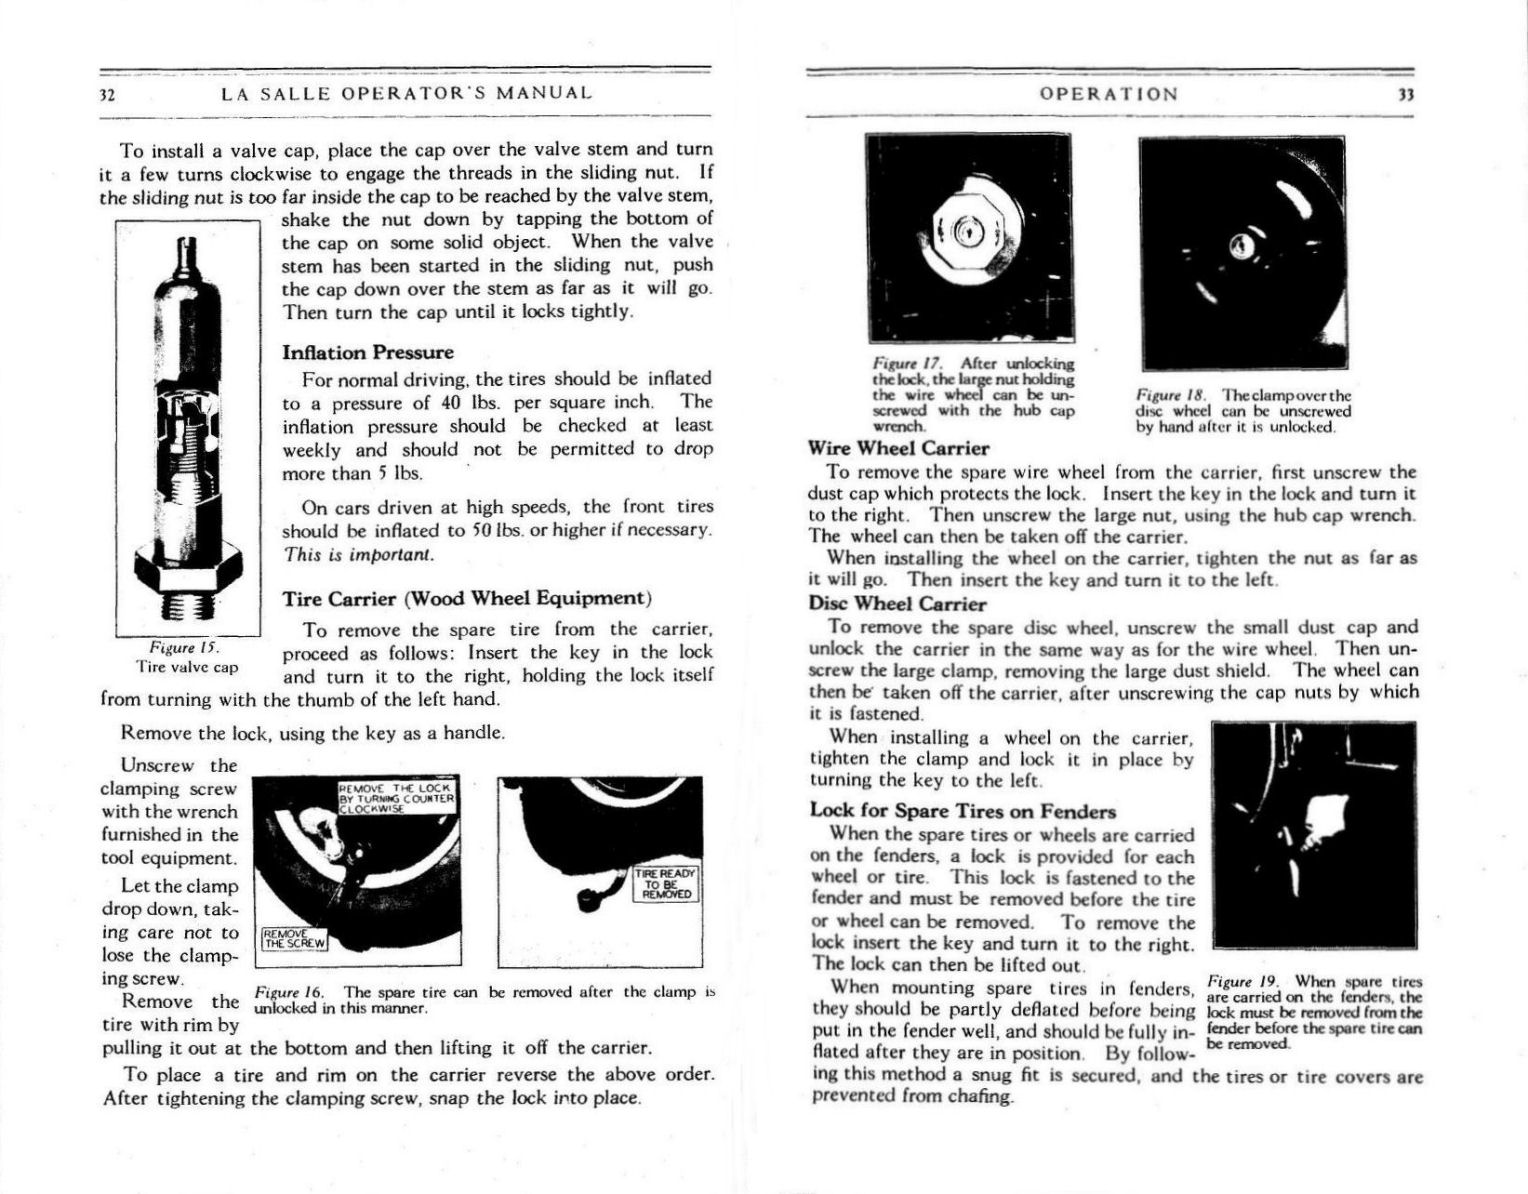 1927_LaSalle_Manual-032-033